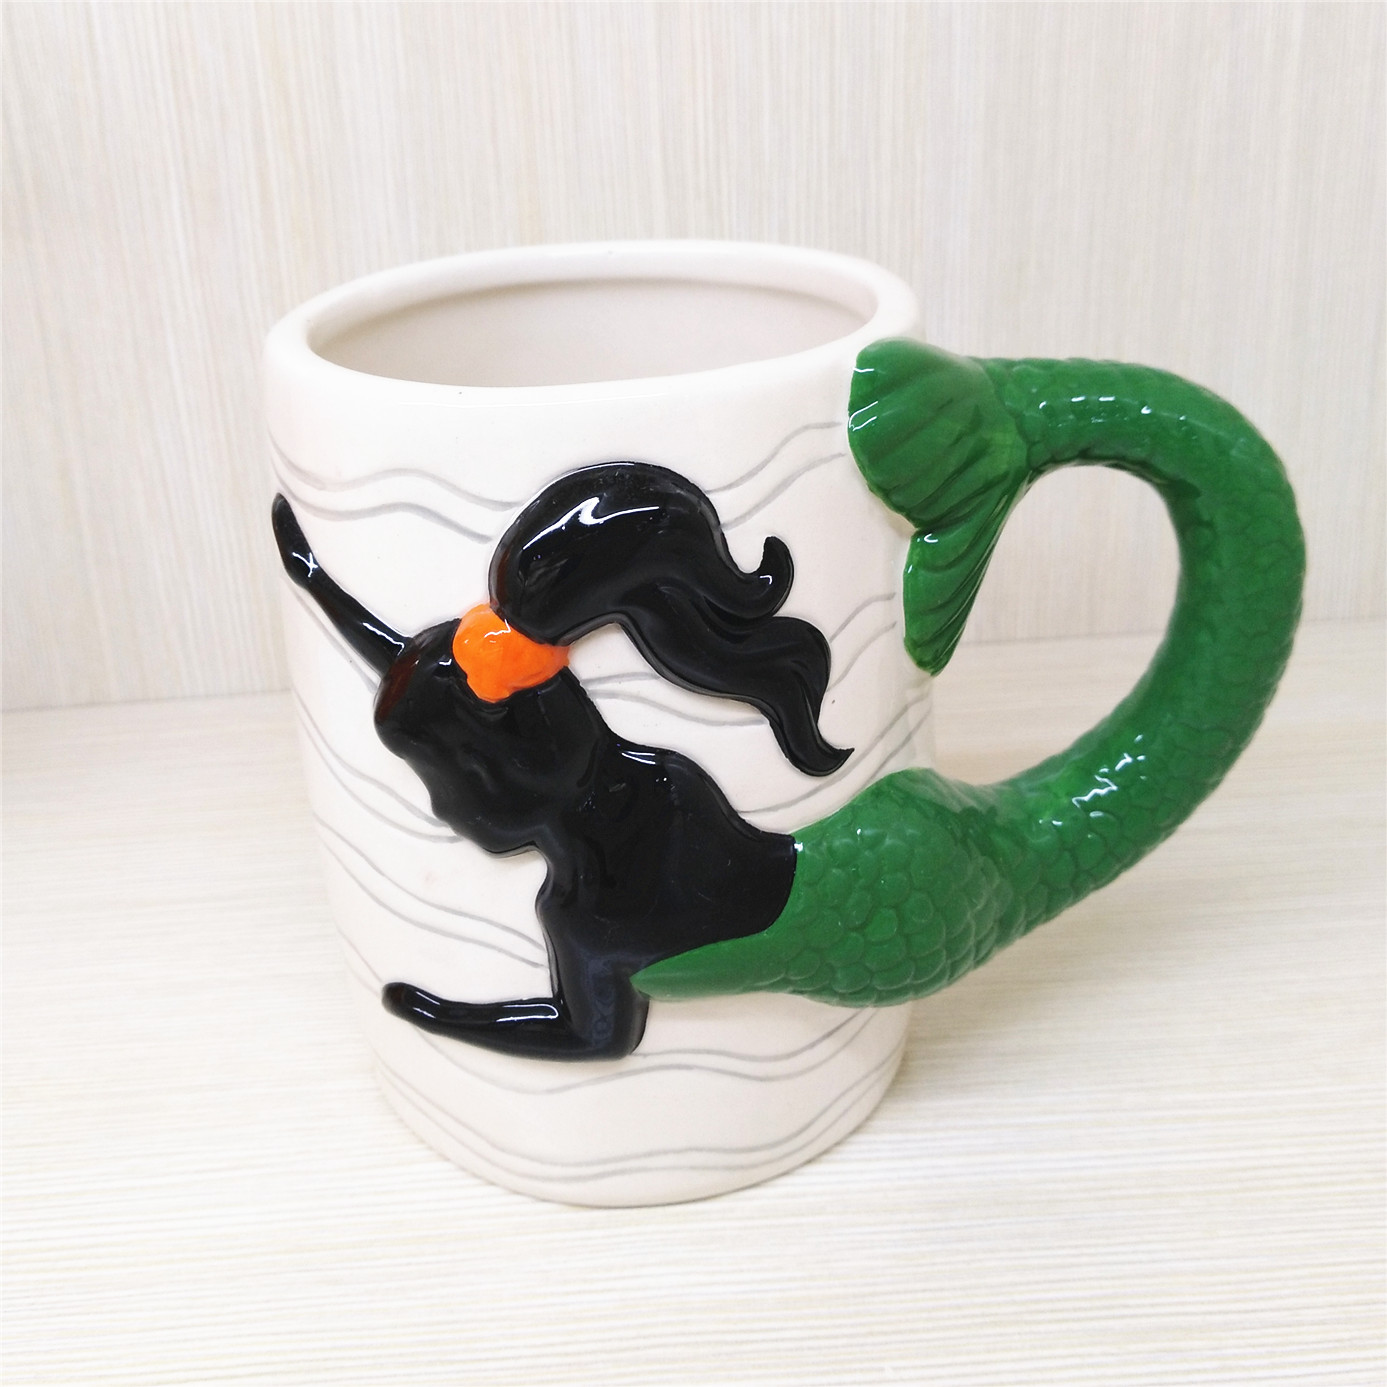 Handcrafts Mug high quality ceramic Eco-friendly  Novelty Mug  Mermaid  Shape coffee mug